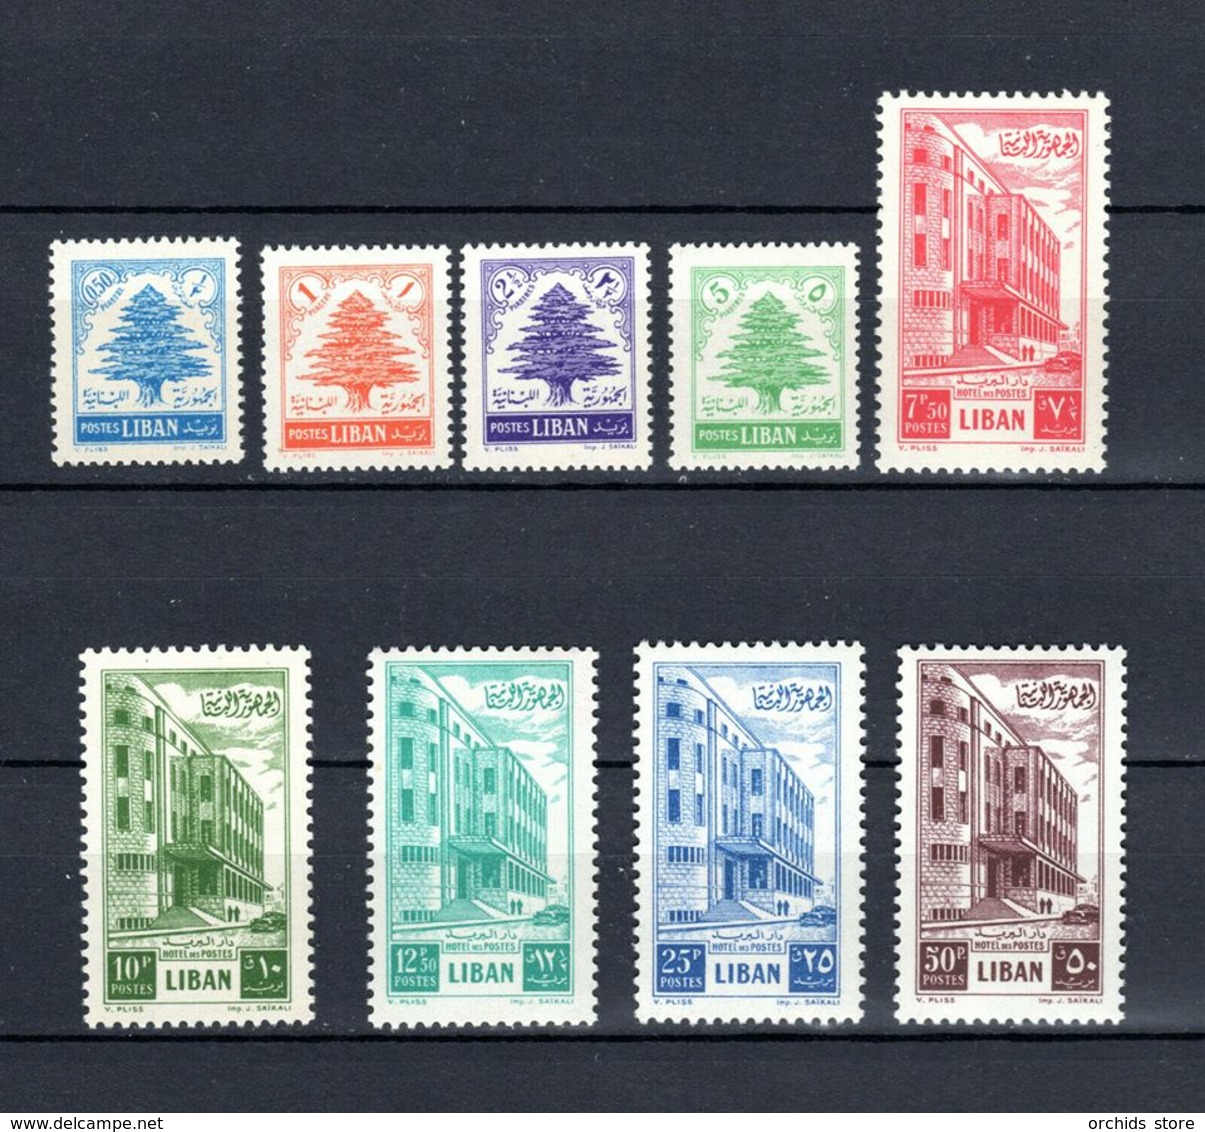 E20 - Lebanon 1953 Complete Set 9v. MNH - Cedar Tree And Post House - Rare Set - Syria